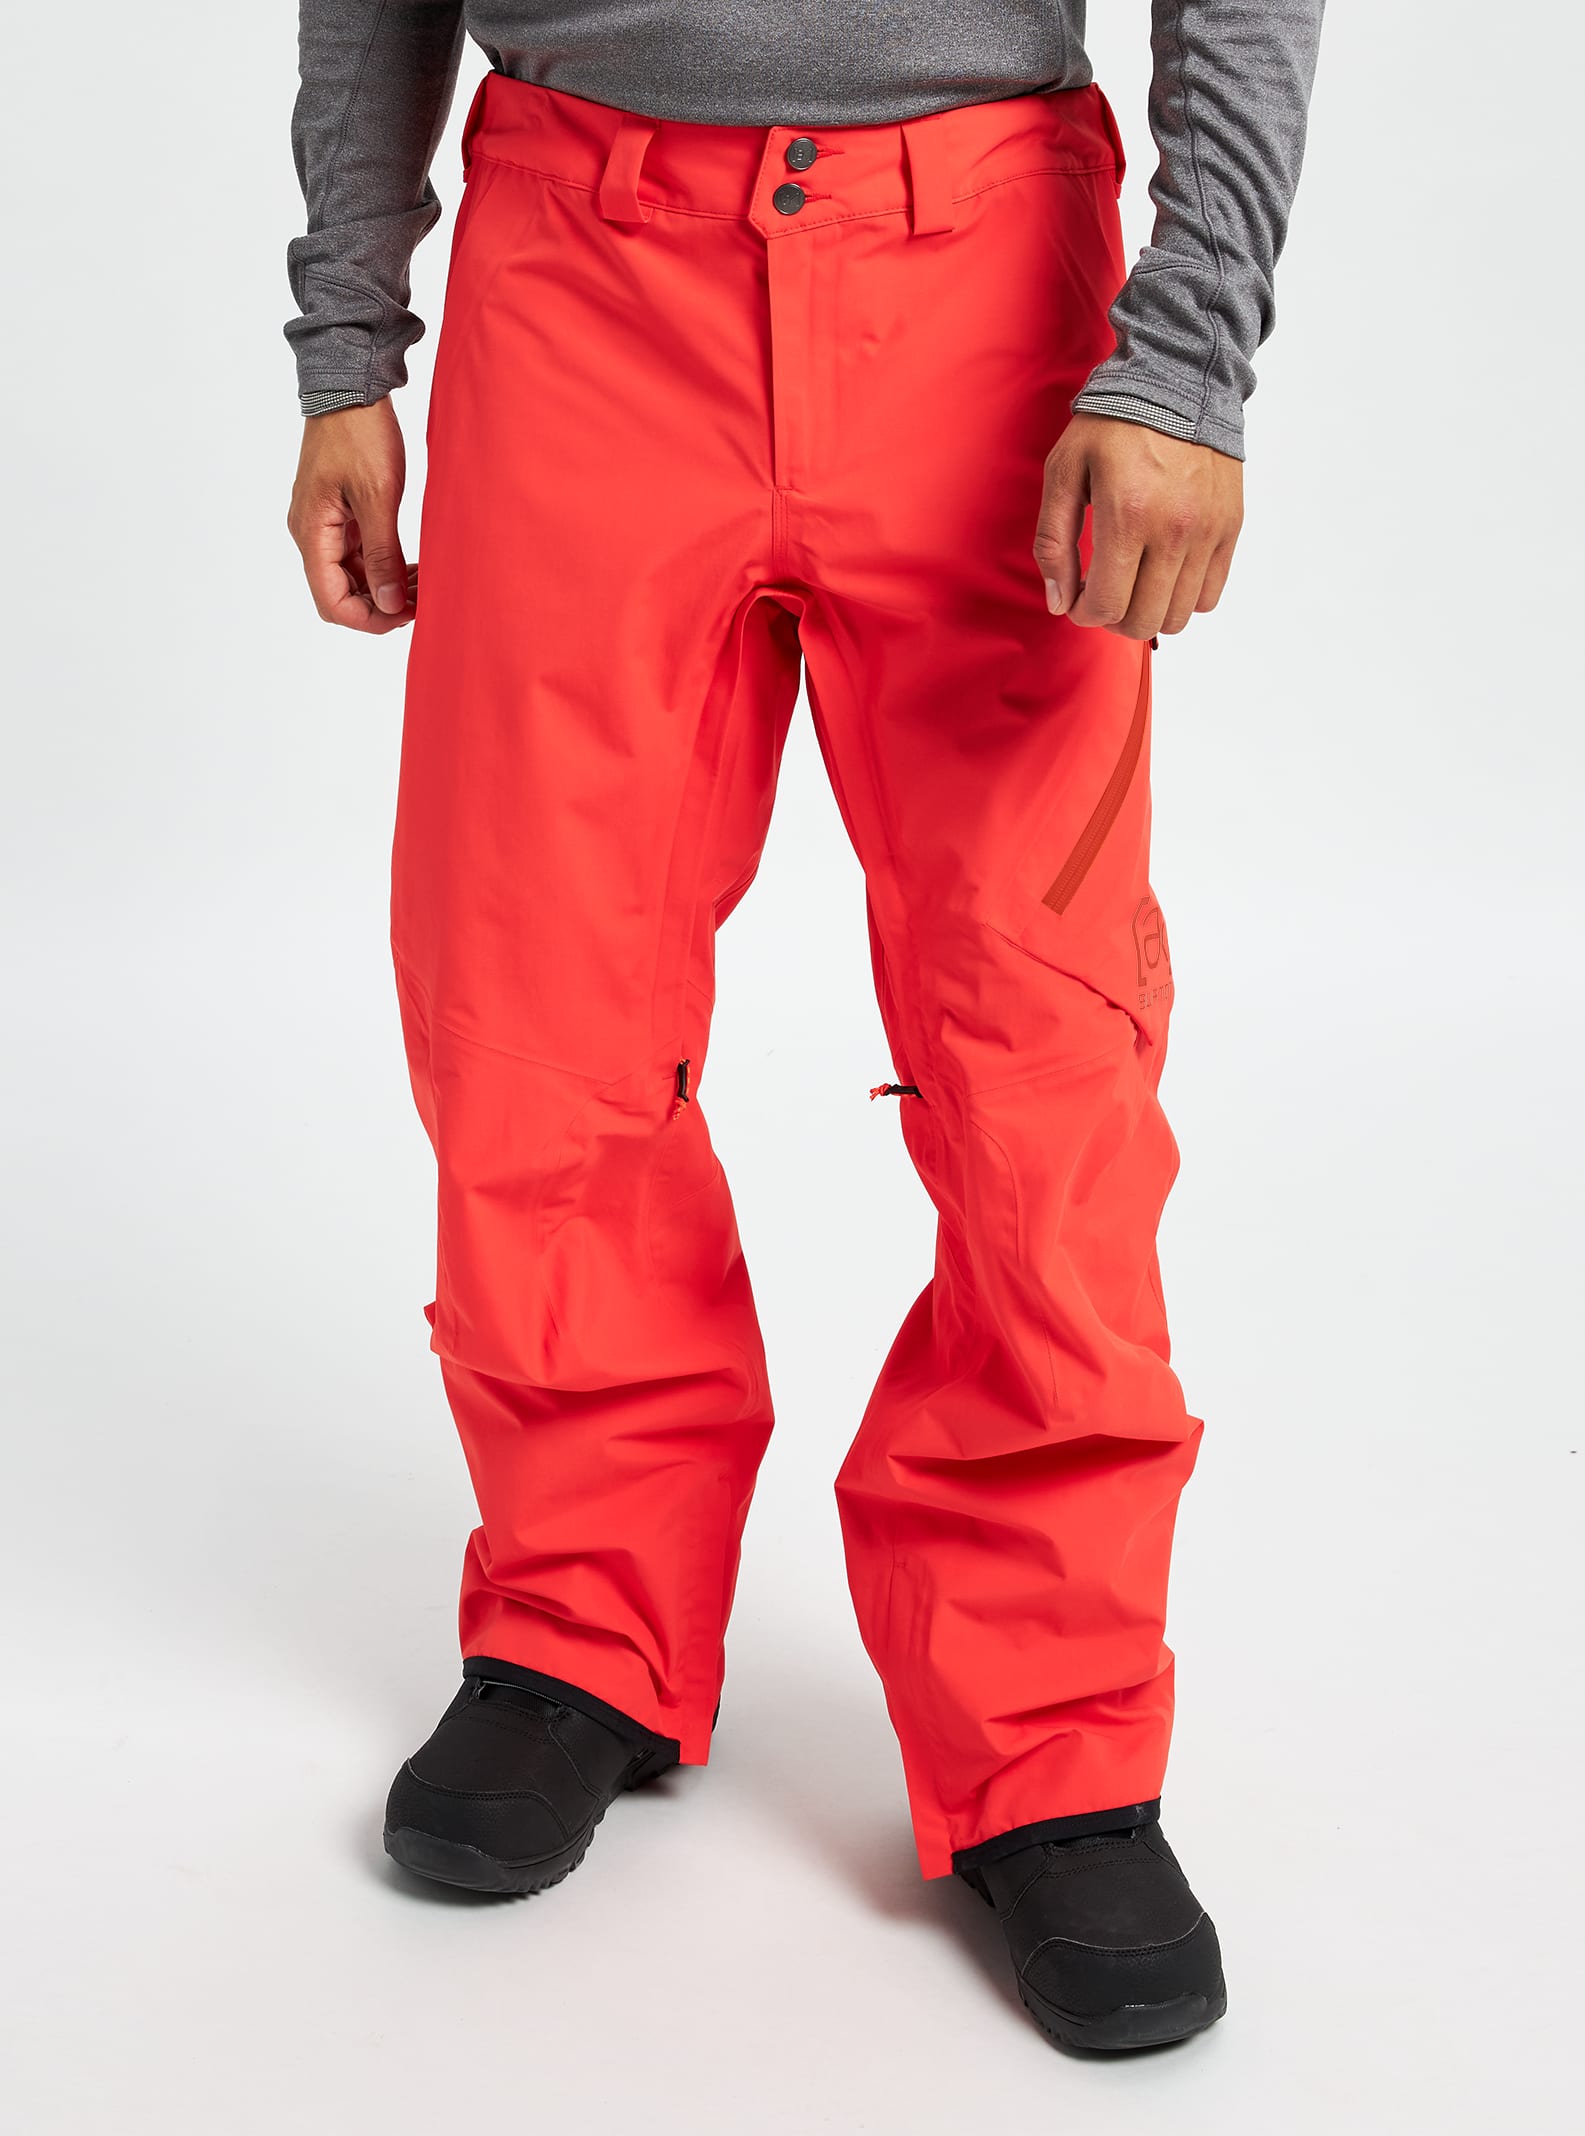 Men's Snowboard Pants | Burton Snowboards LV